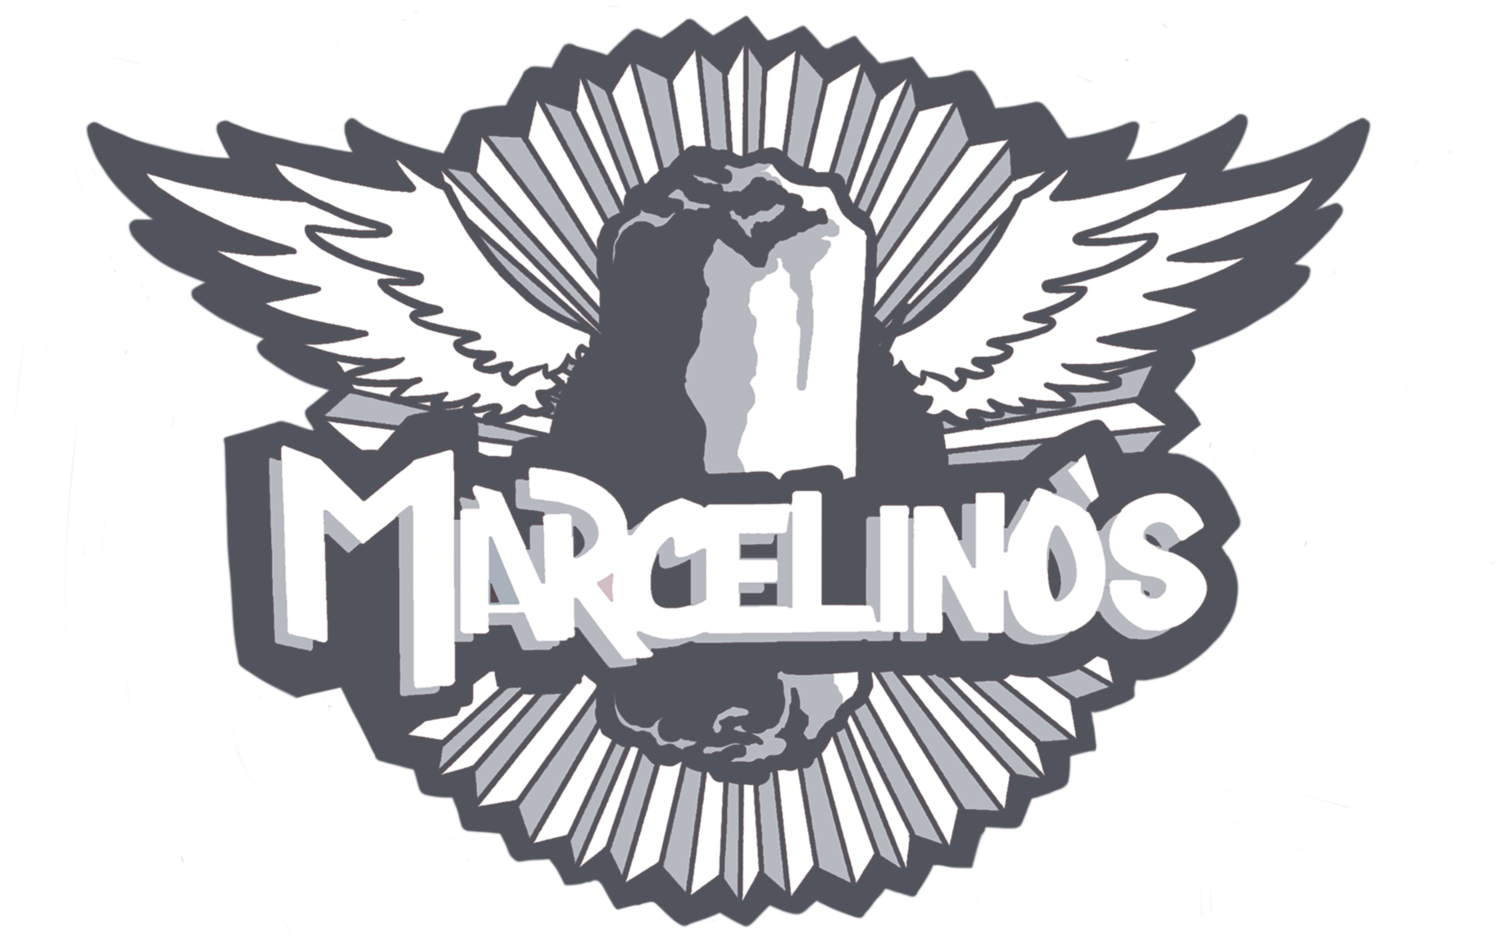 Marcelino's